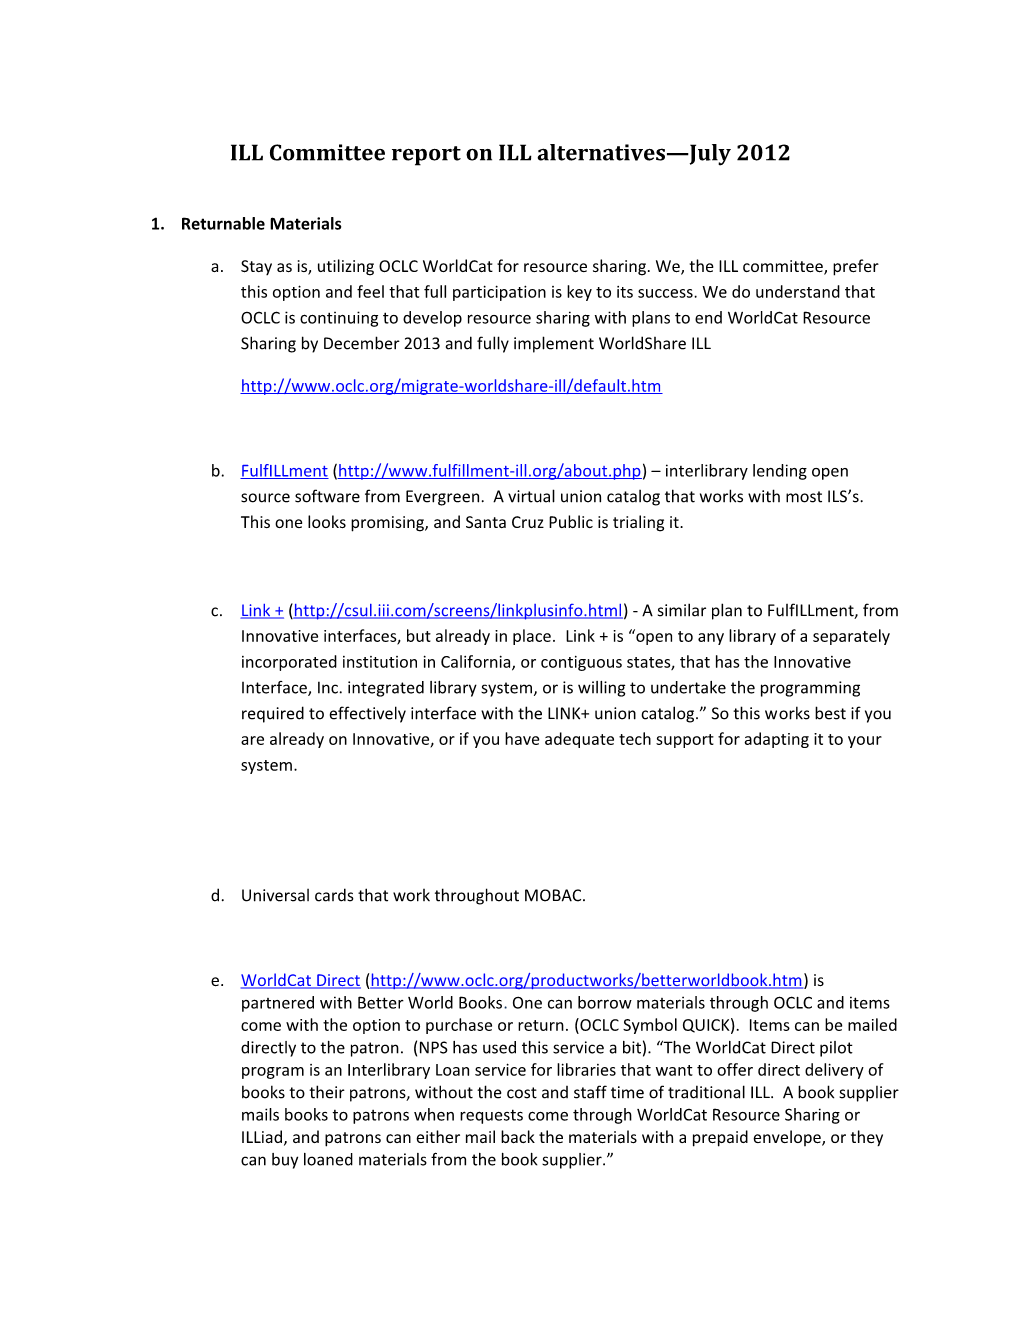 ILL Committee Report on ILL Alternatives July 2012